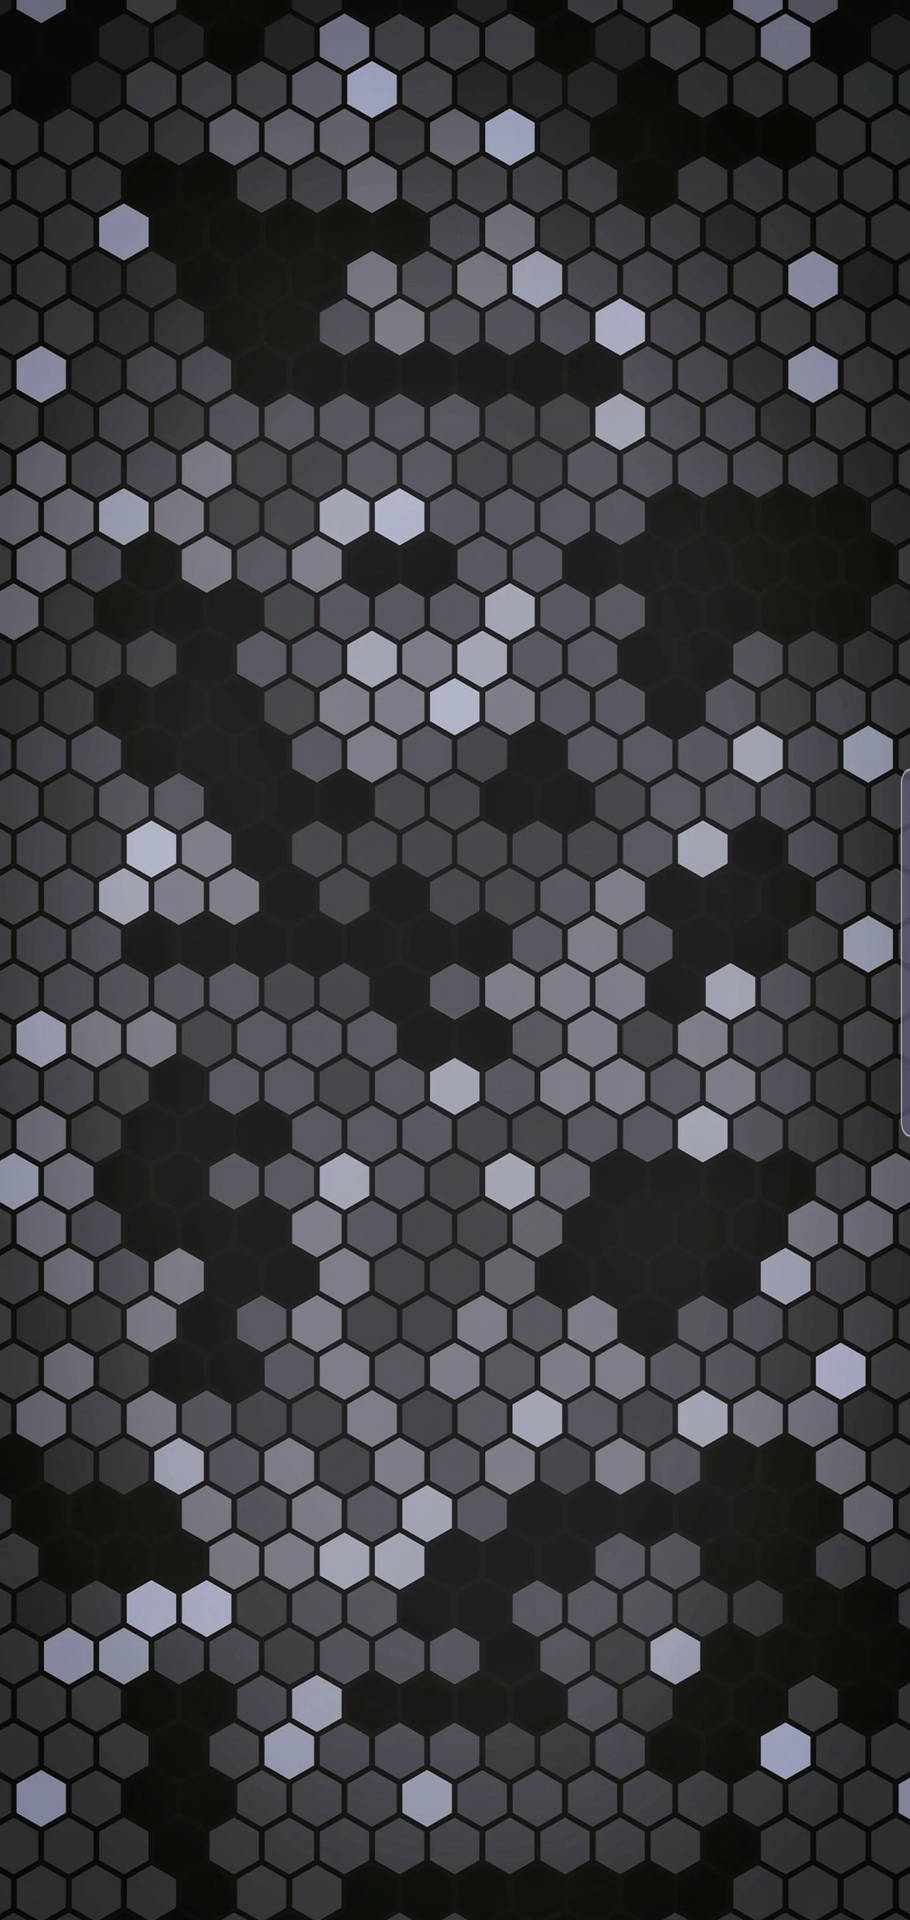 Patronespoligonales Agujero De Perforación 4k Fondo de pantalla